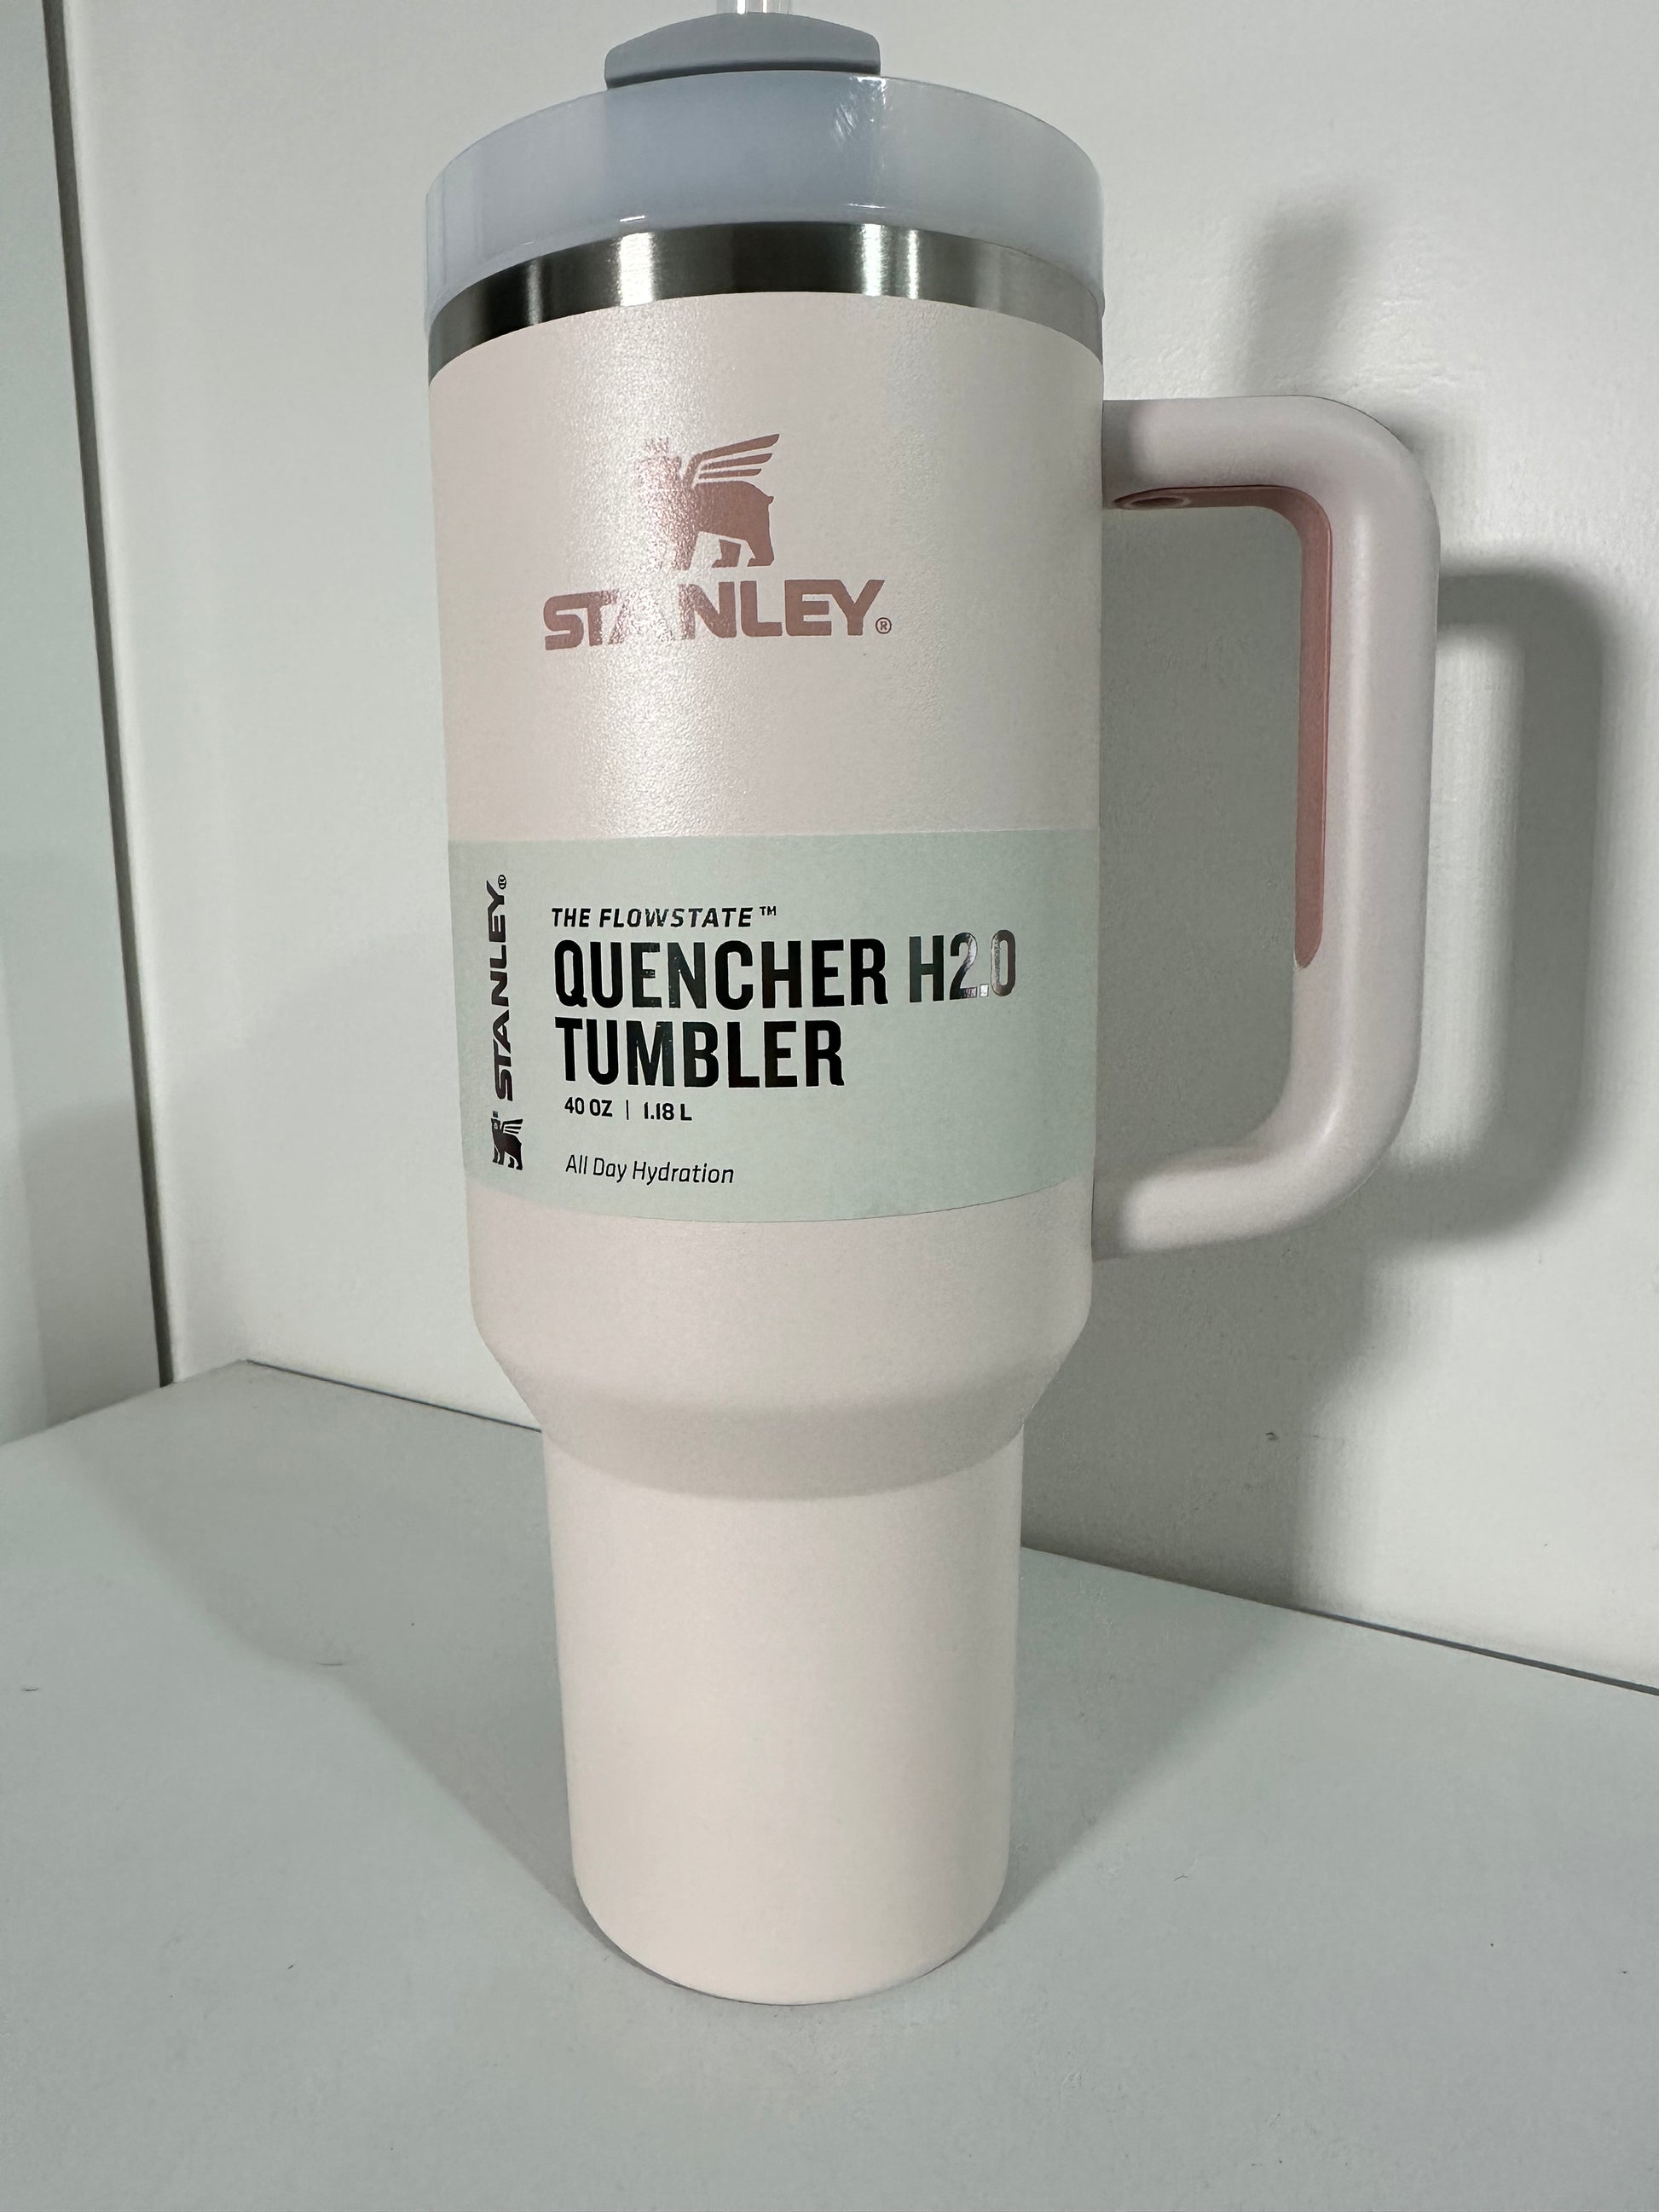 Stanley Adventure Quencher 40oz Travel Tumbler VS Quencher H2.0